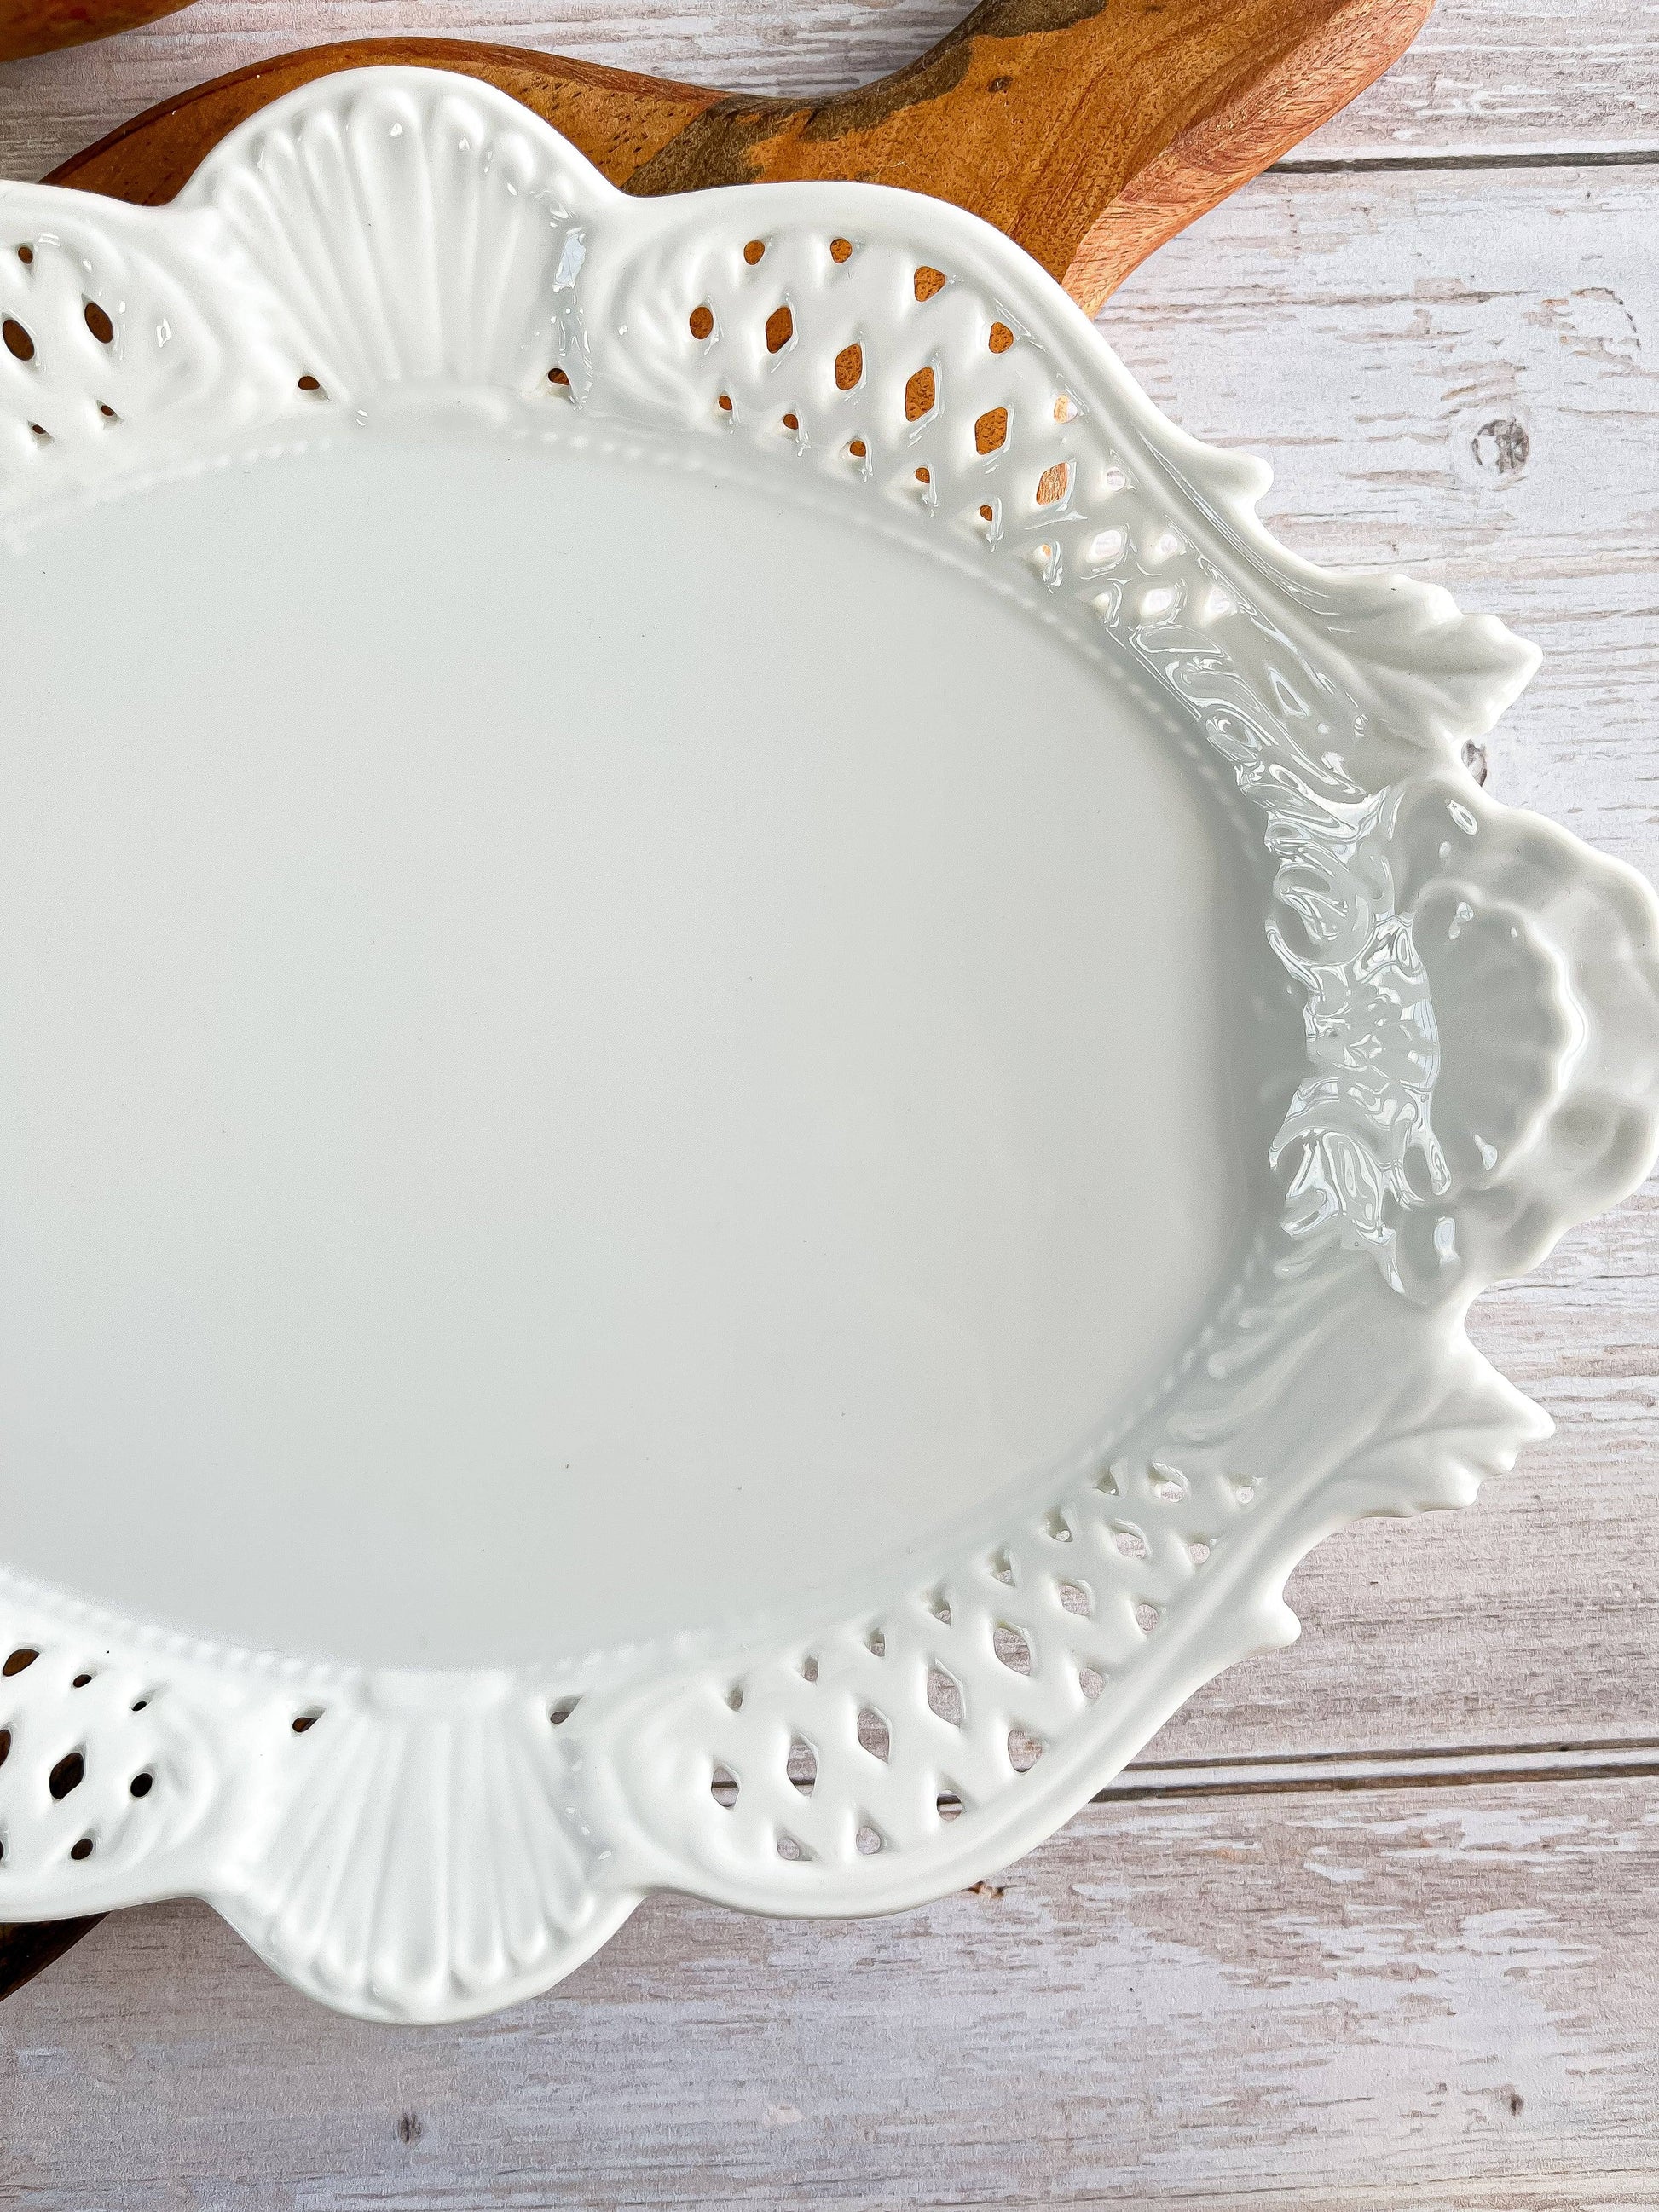 Elegant White Ceramic Pierced Pattern Decorative Tray with Scalloped Edges - SOSC Home